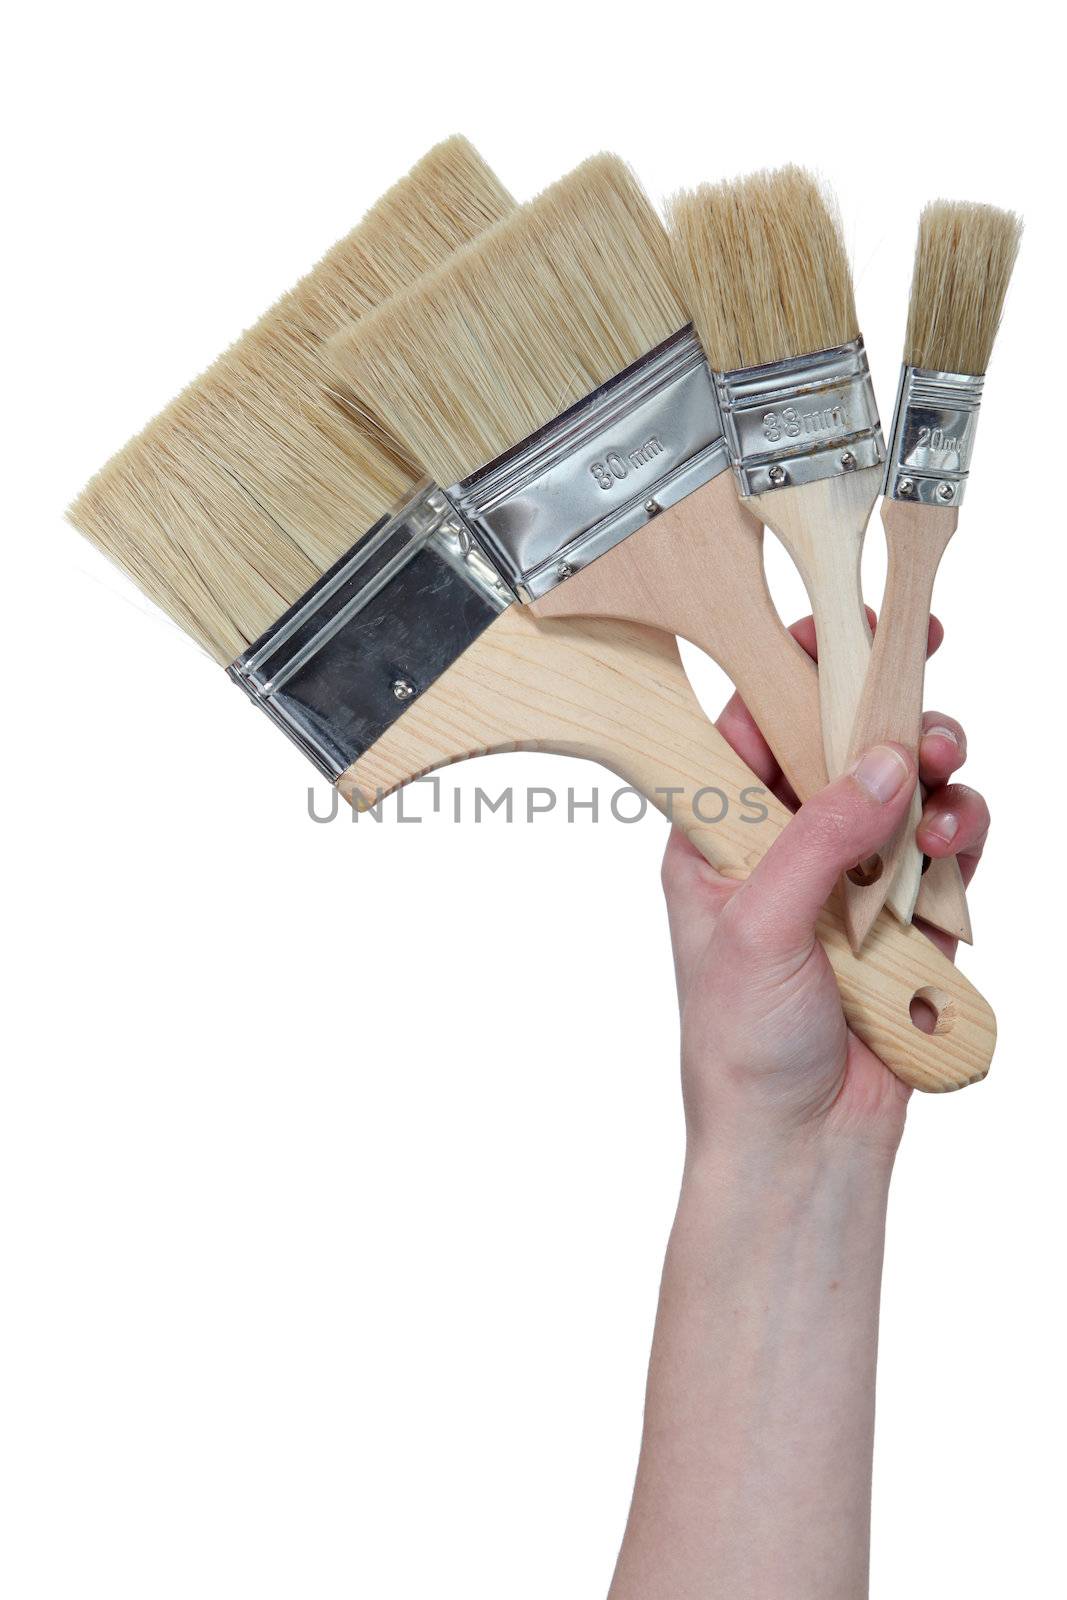 A set of paintbrushes